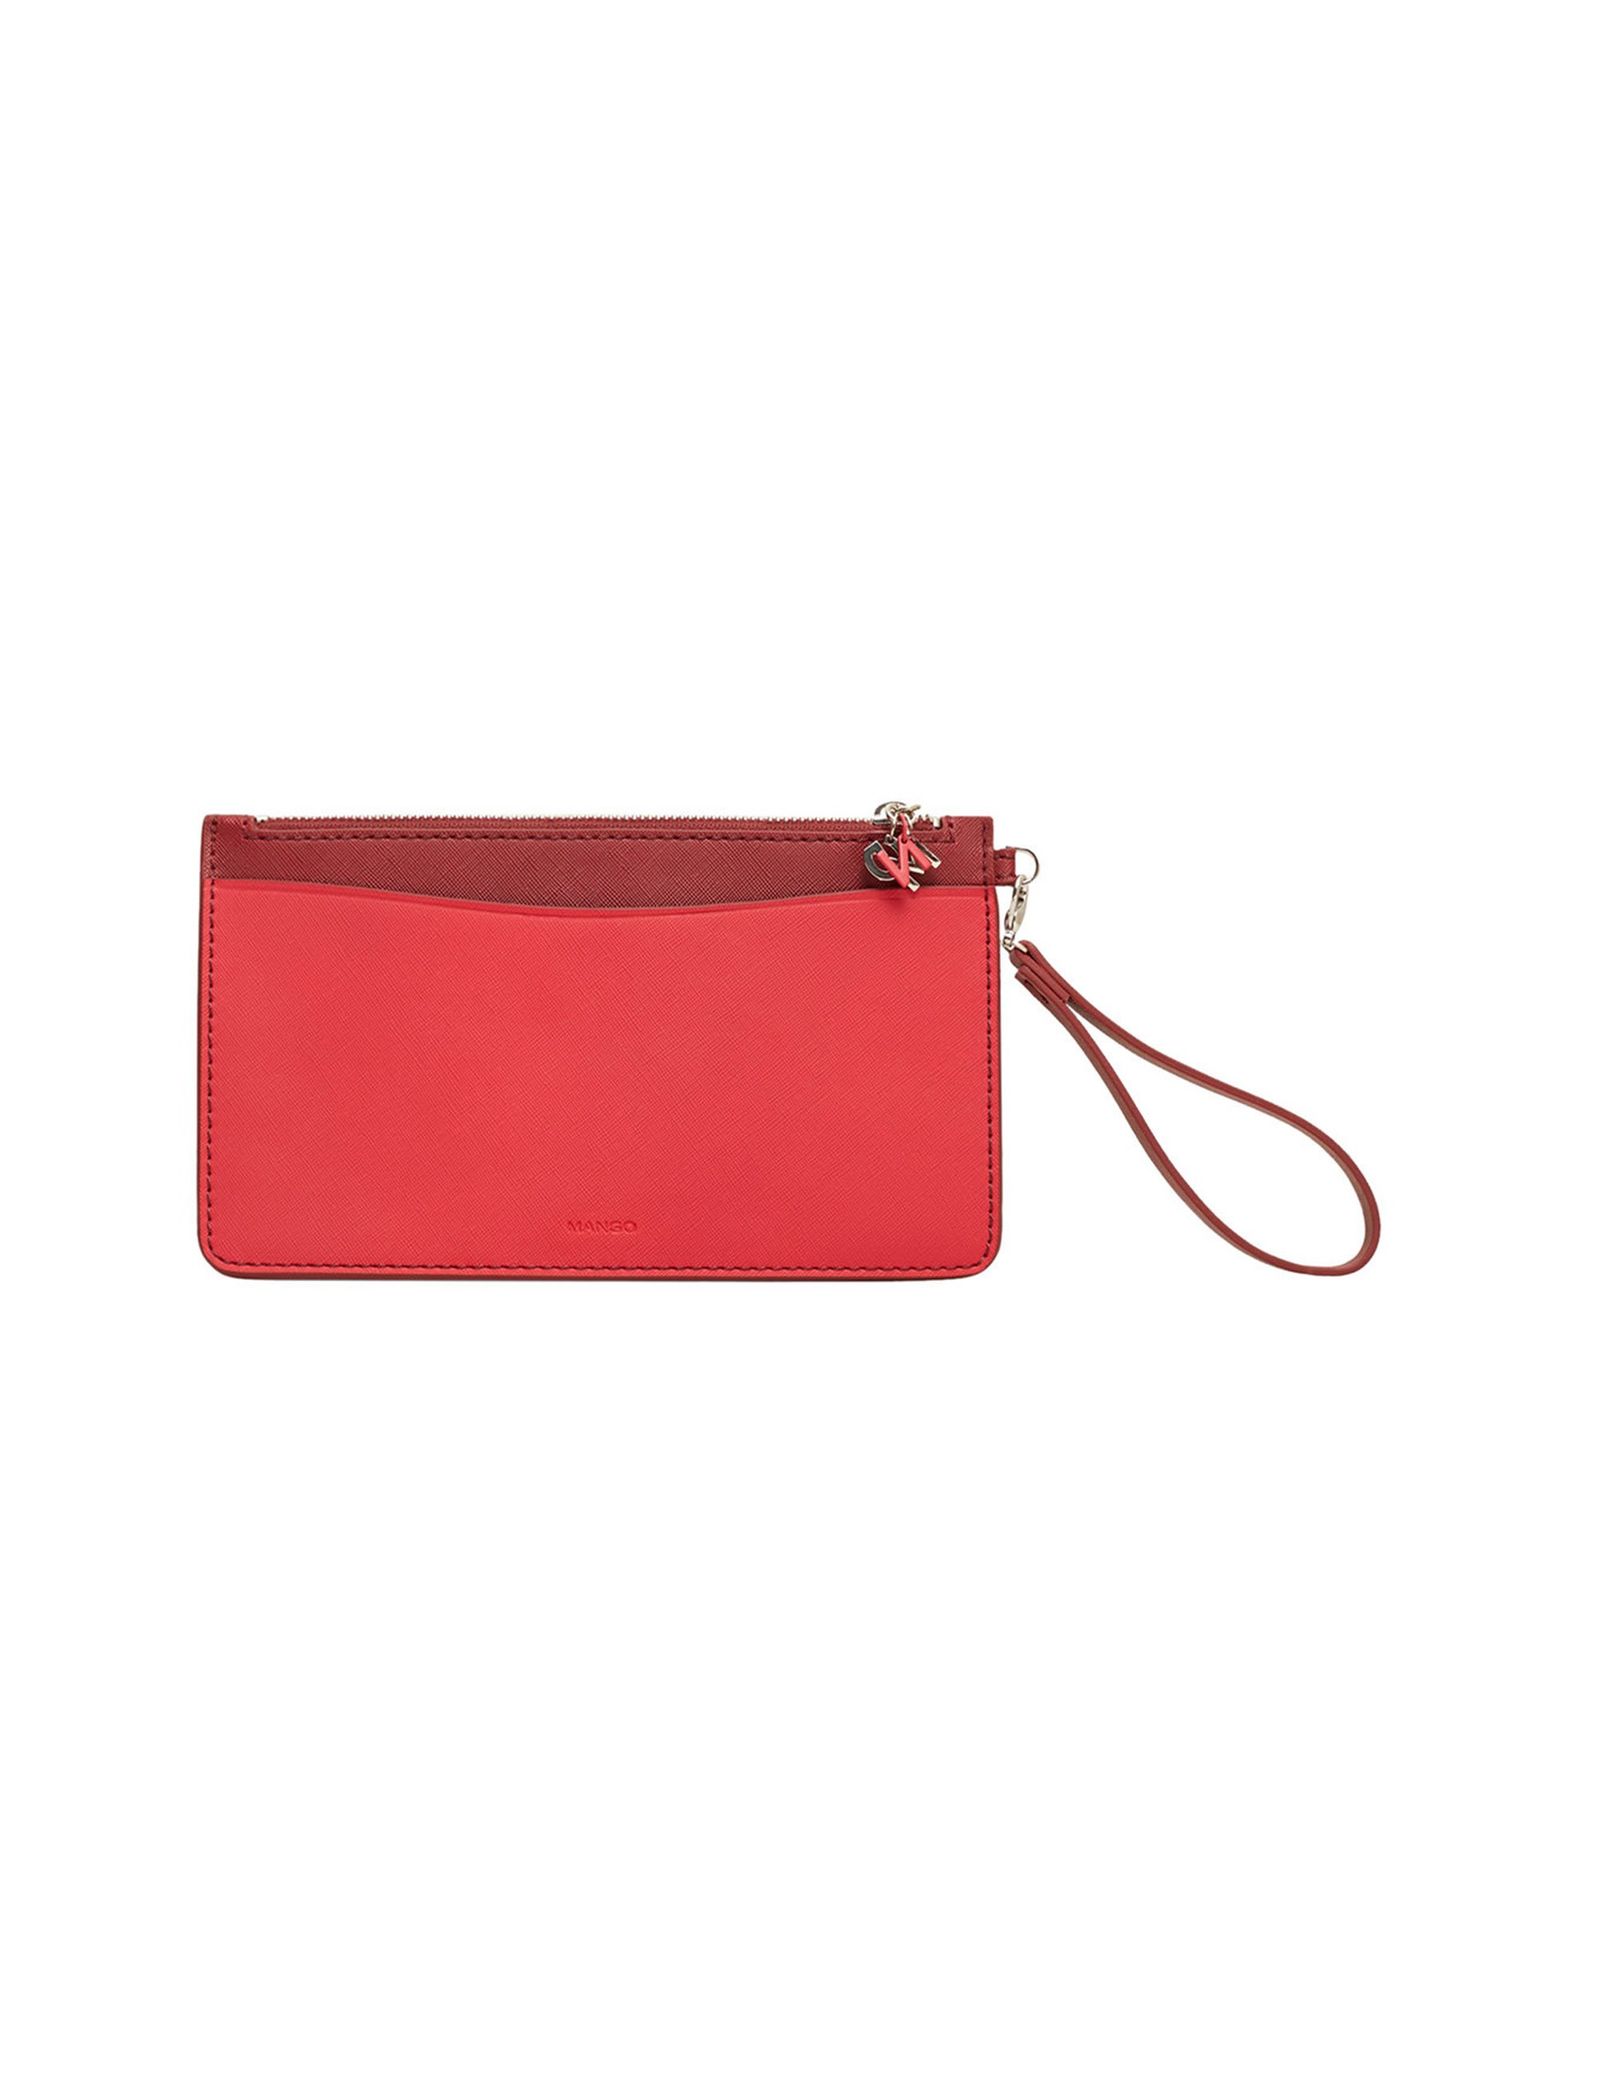 کیف لوازم آرایش زنانه - مانگو - قرمز - 1